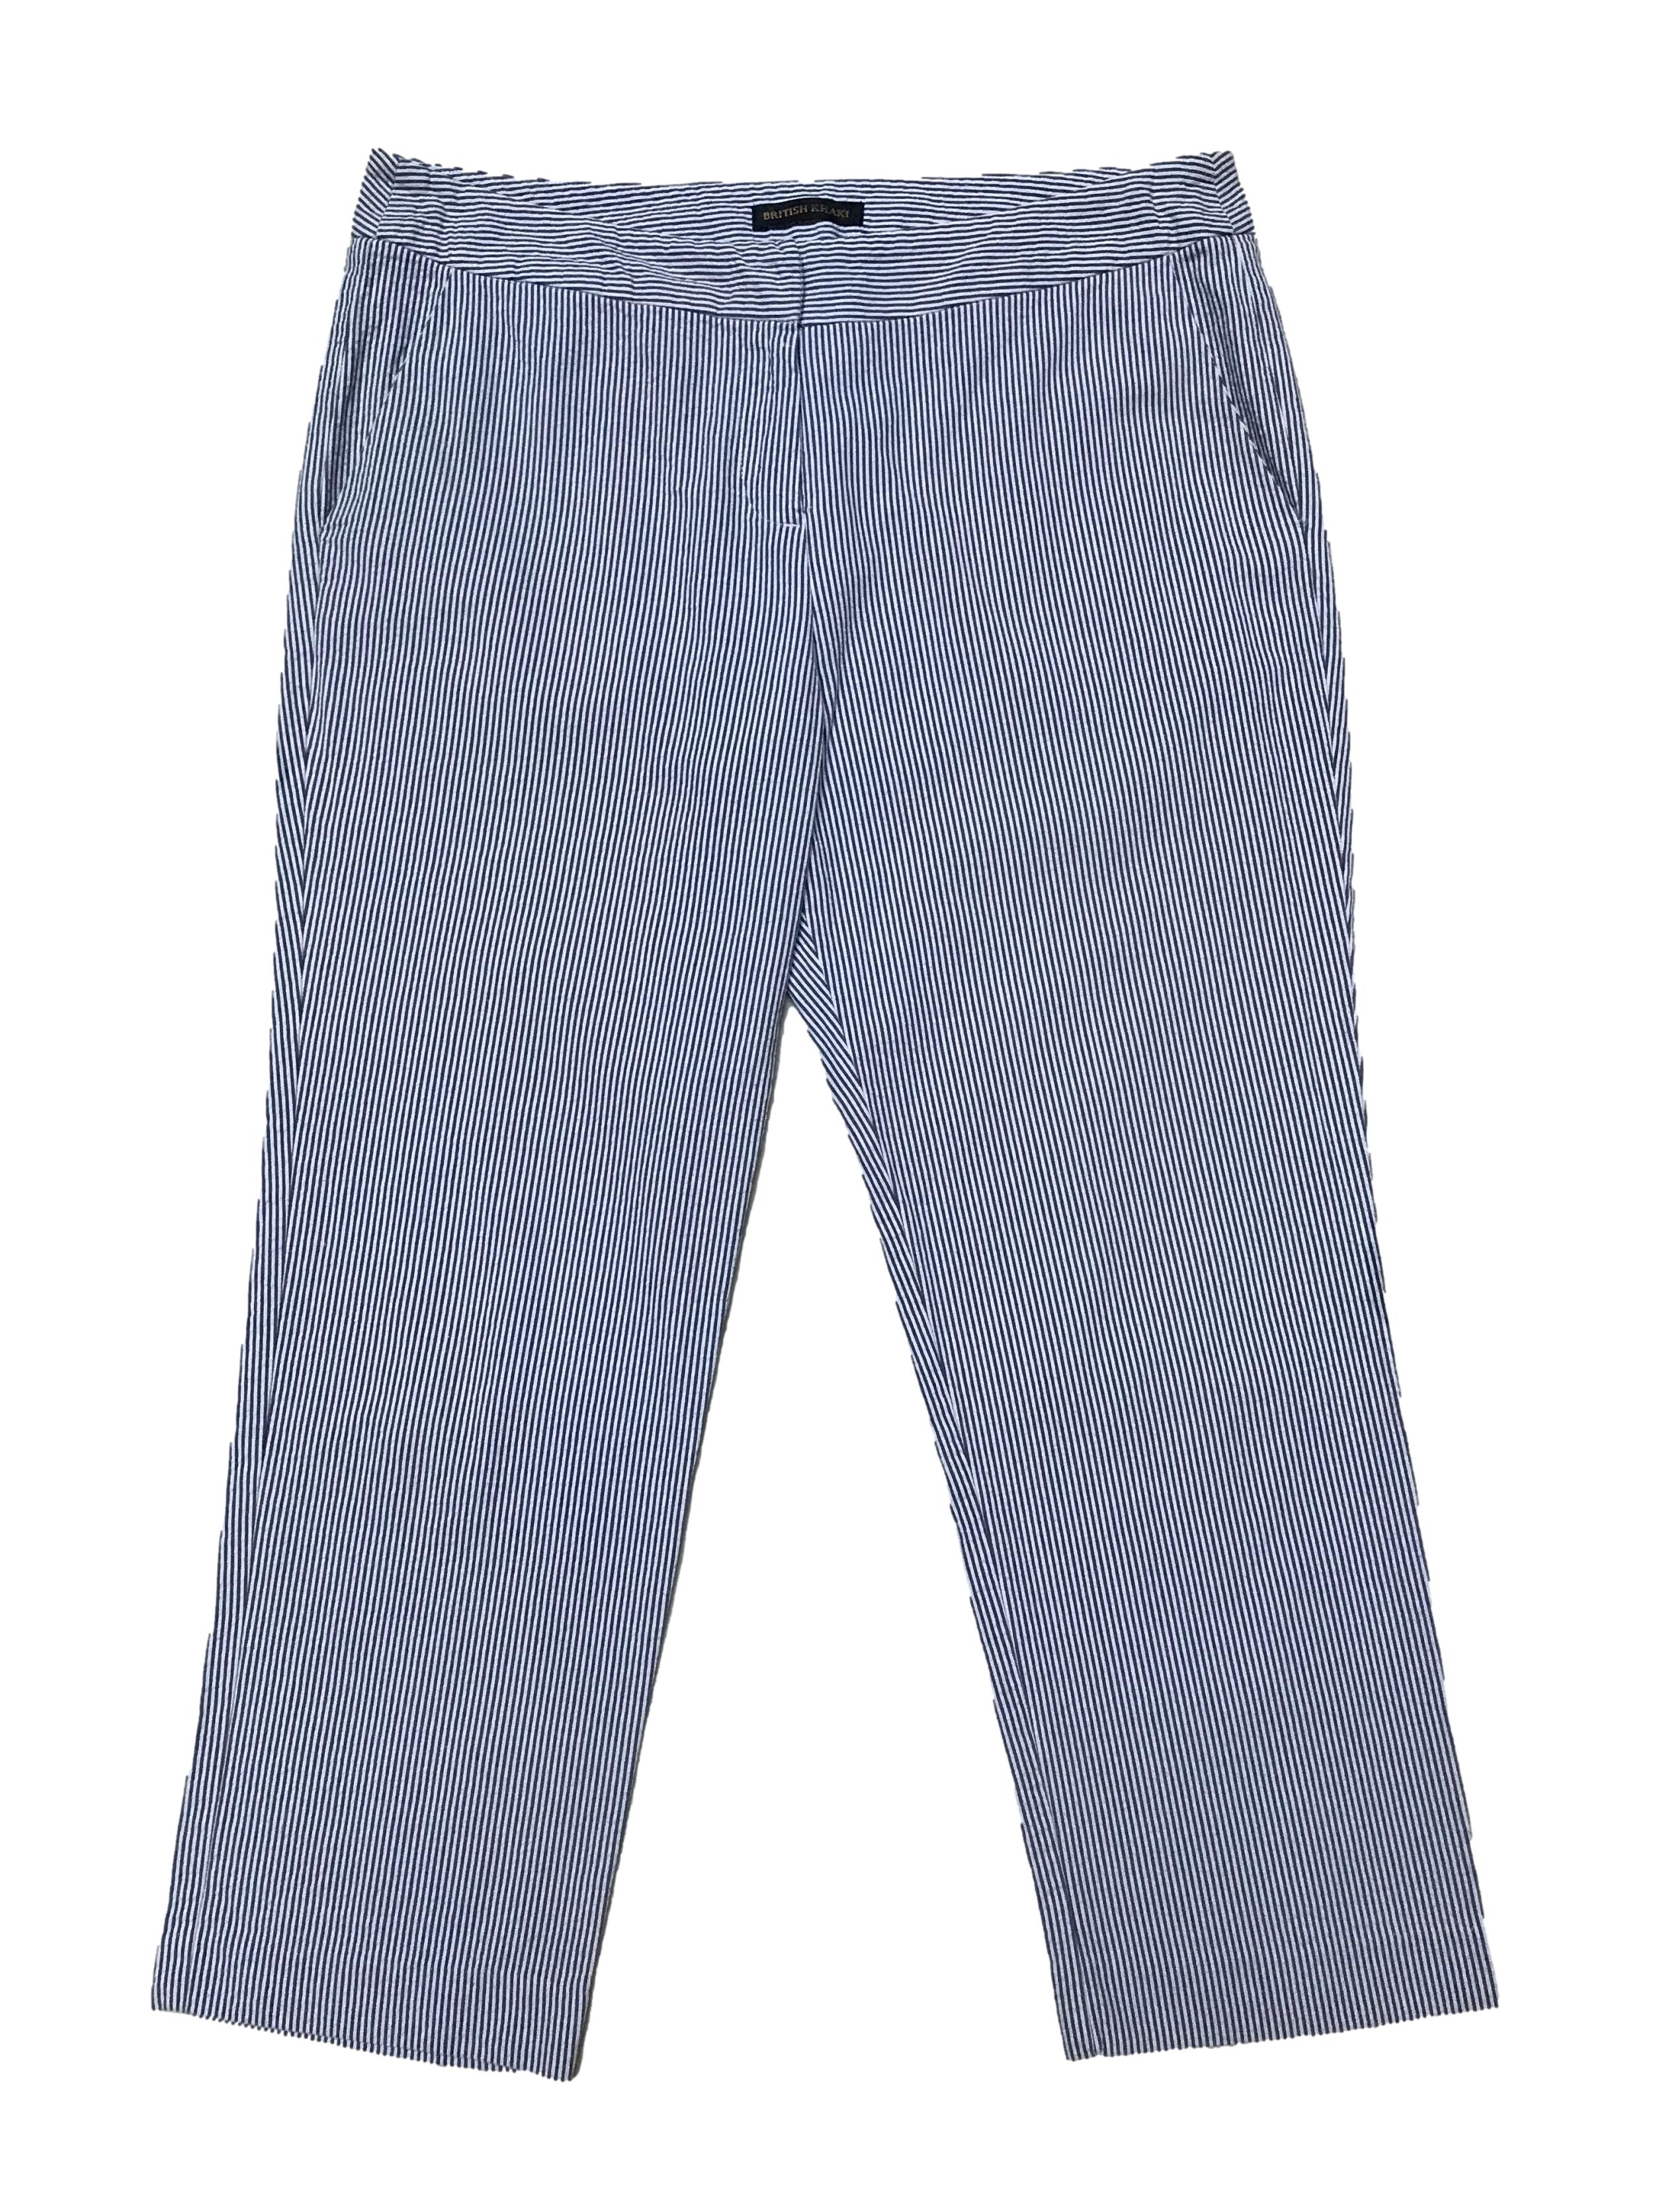 Pantalón al tobillo British Khaki a rayas blanca y azules 100% algodón, tiro medio, con bolsillos laterales. Pretina 44cm Largo 86cm